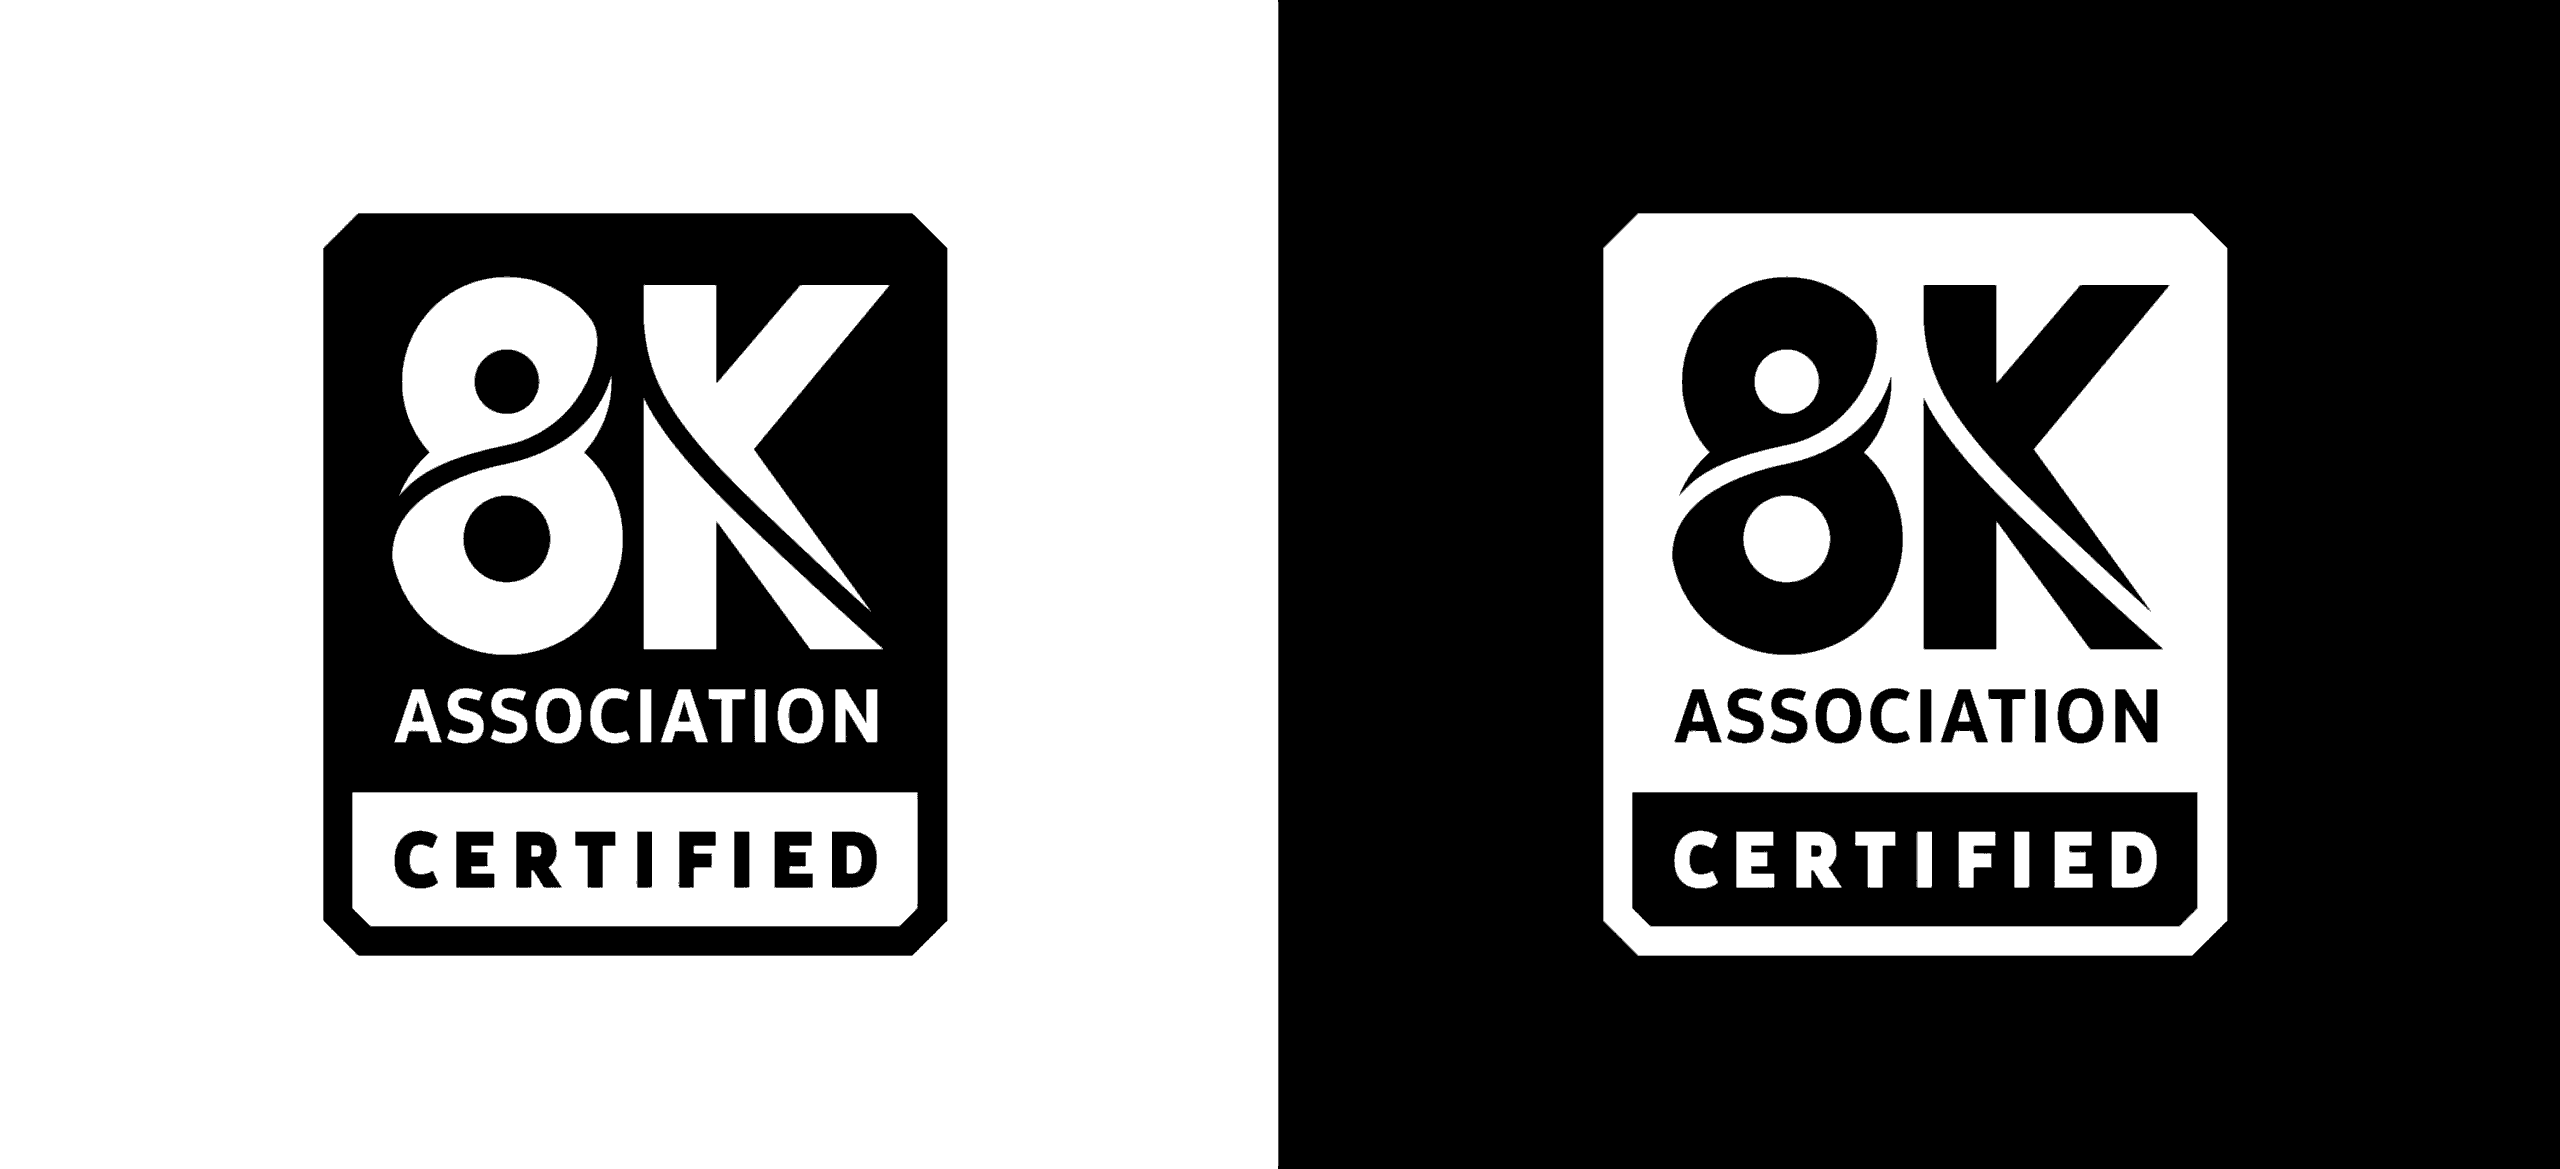 8K logo ufficiale 8KA